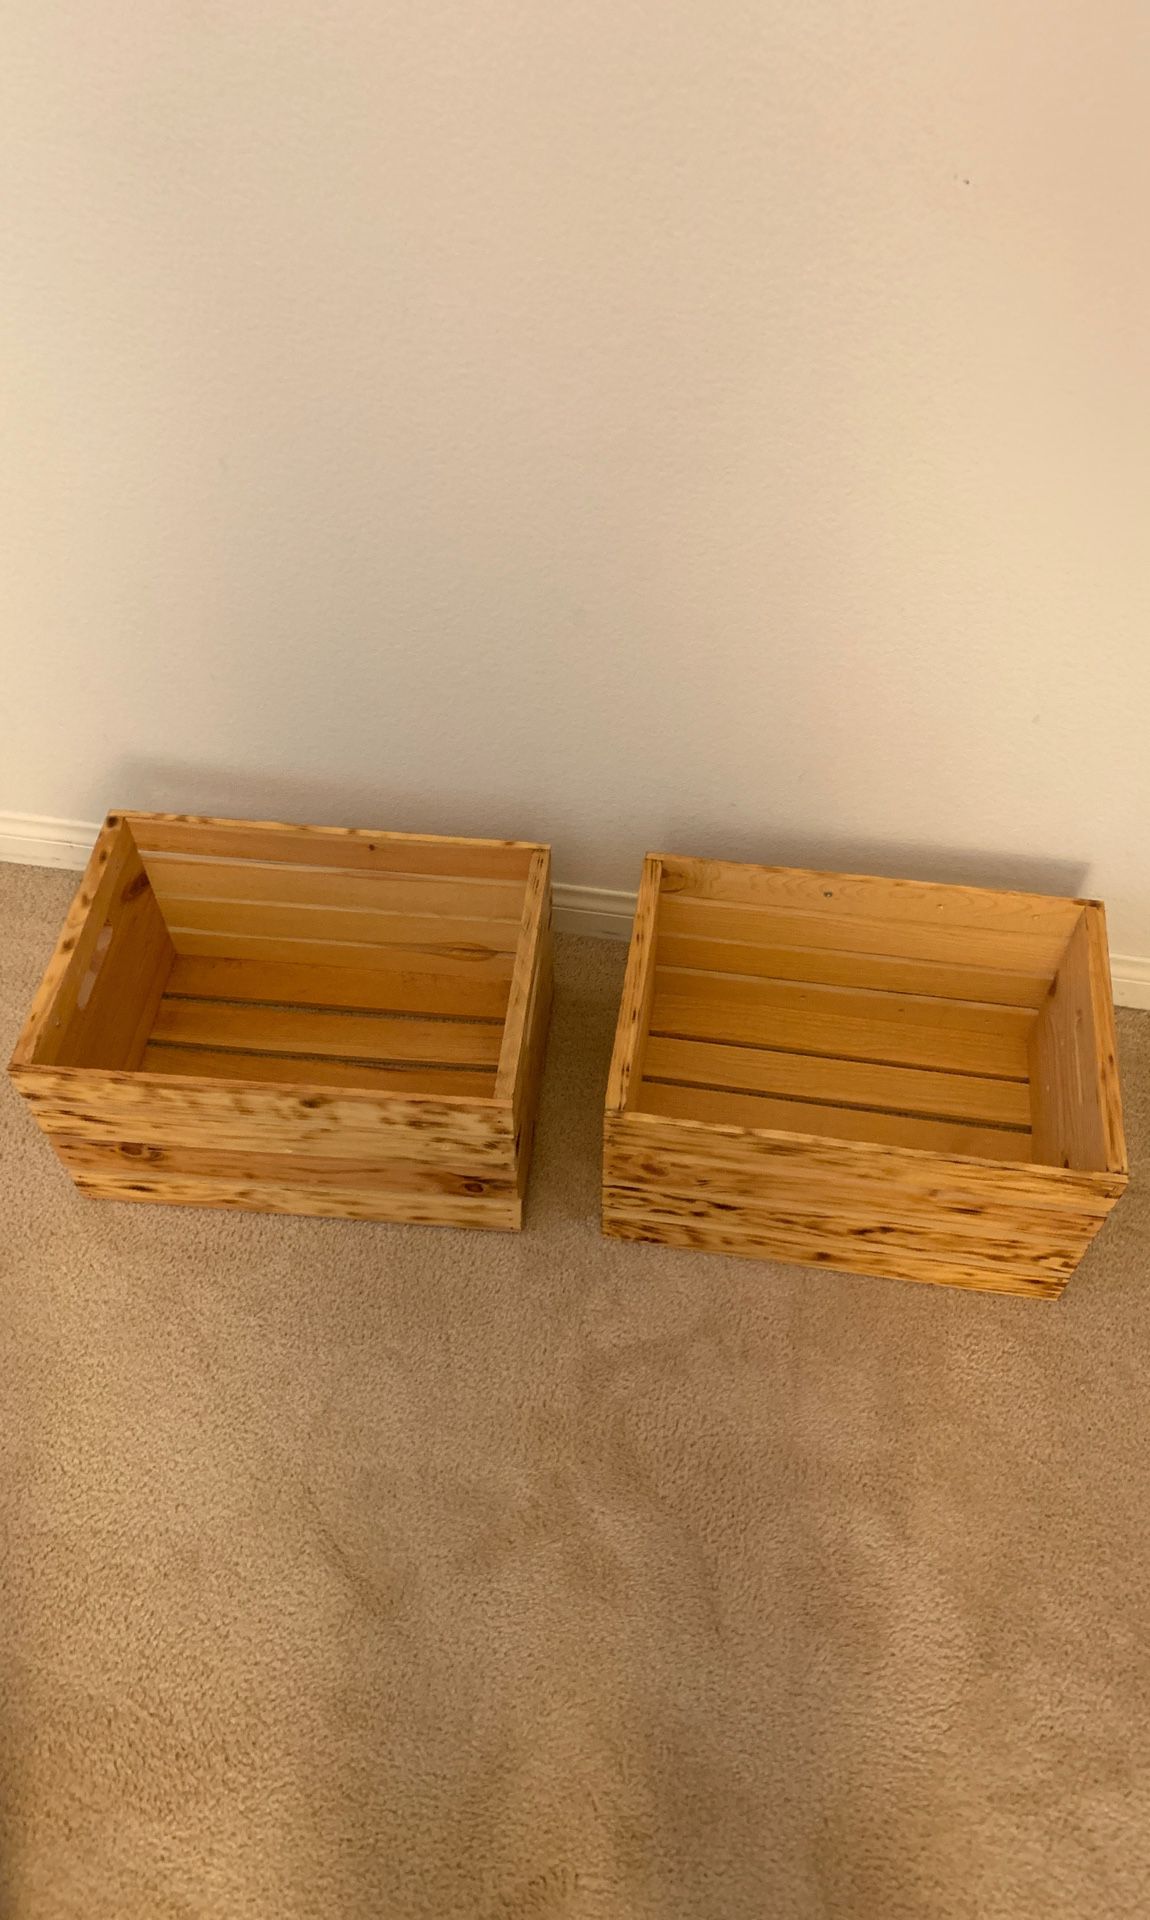 Wood crates